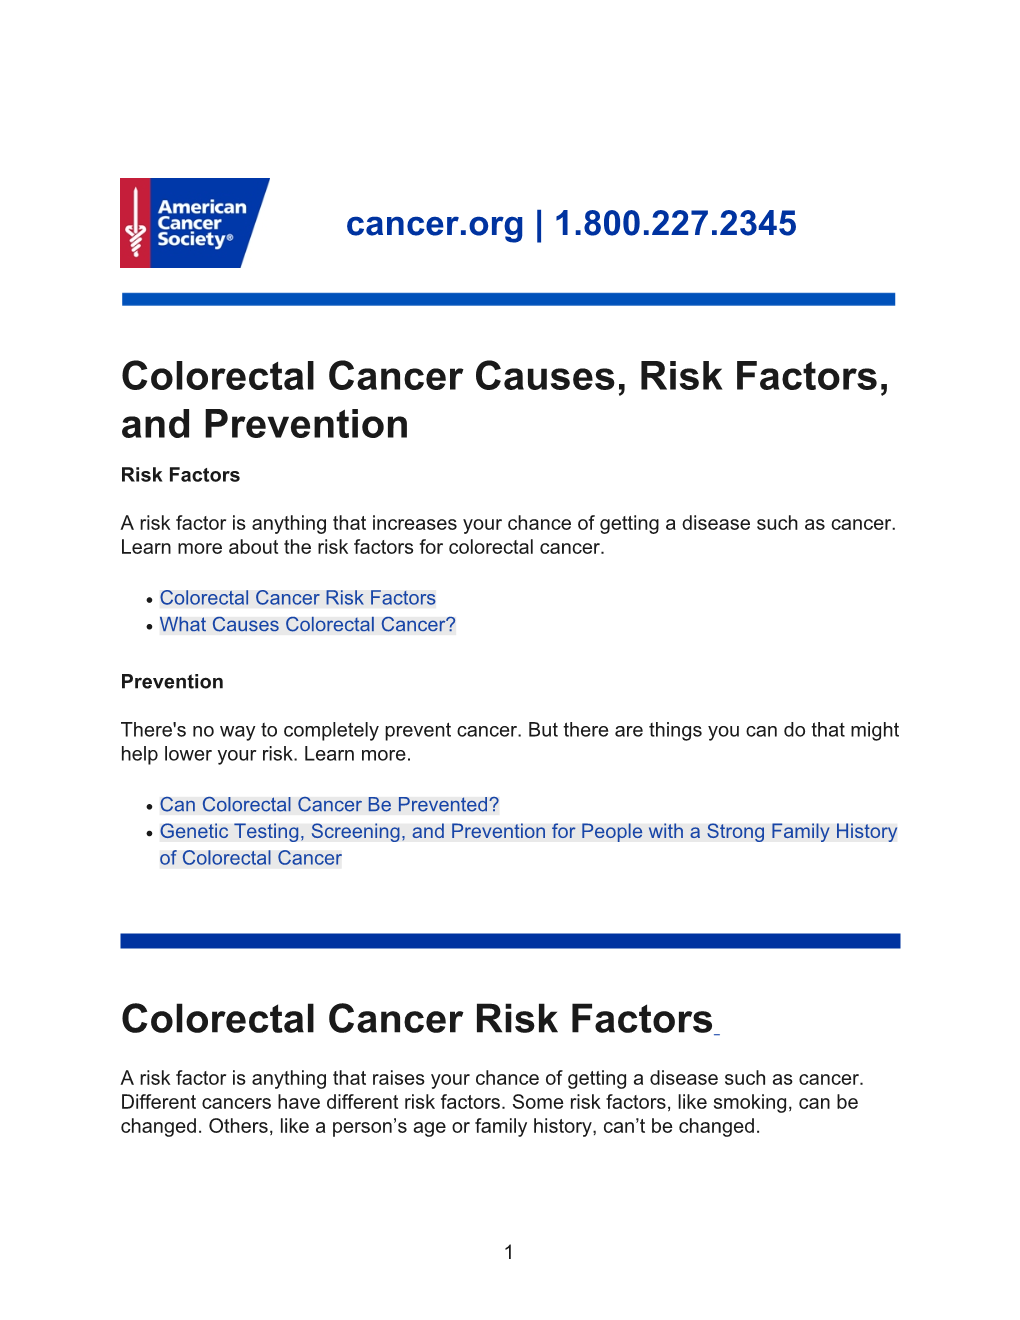 Colorectal Cancer Causes, Risk Factors, and Prevention Risk Factors